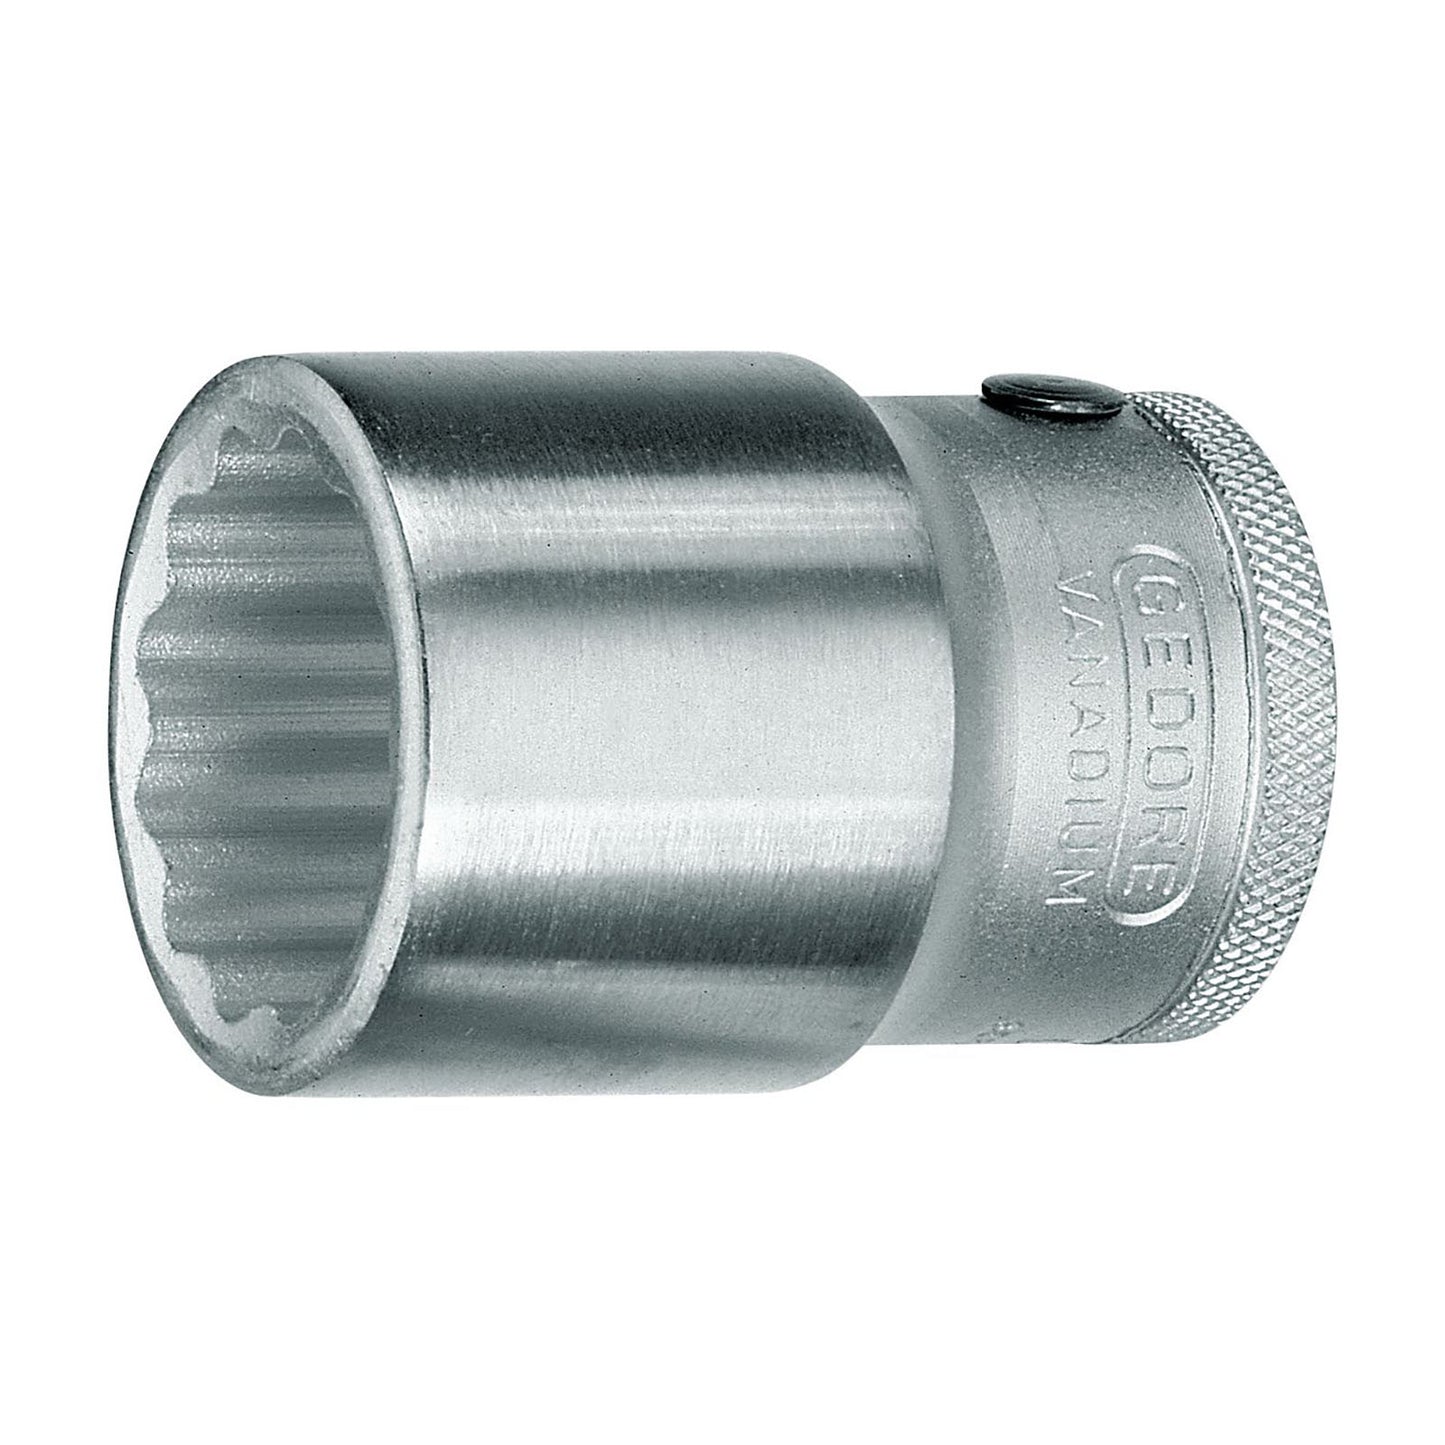 GEDORE D 32 24 - Unit Drive Socket 3/4", 24 mm (6272320)